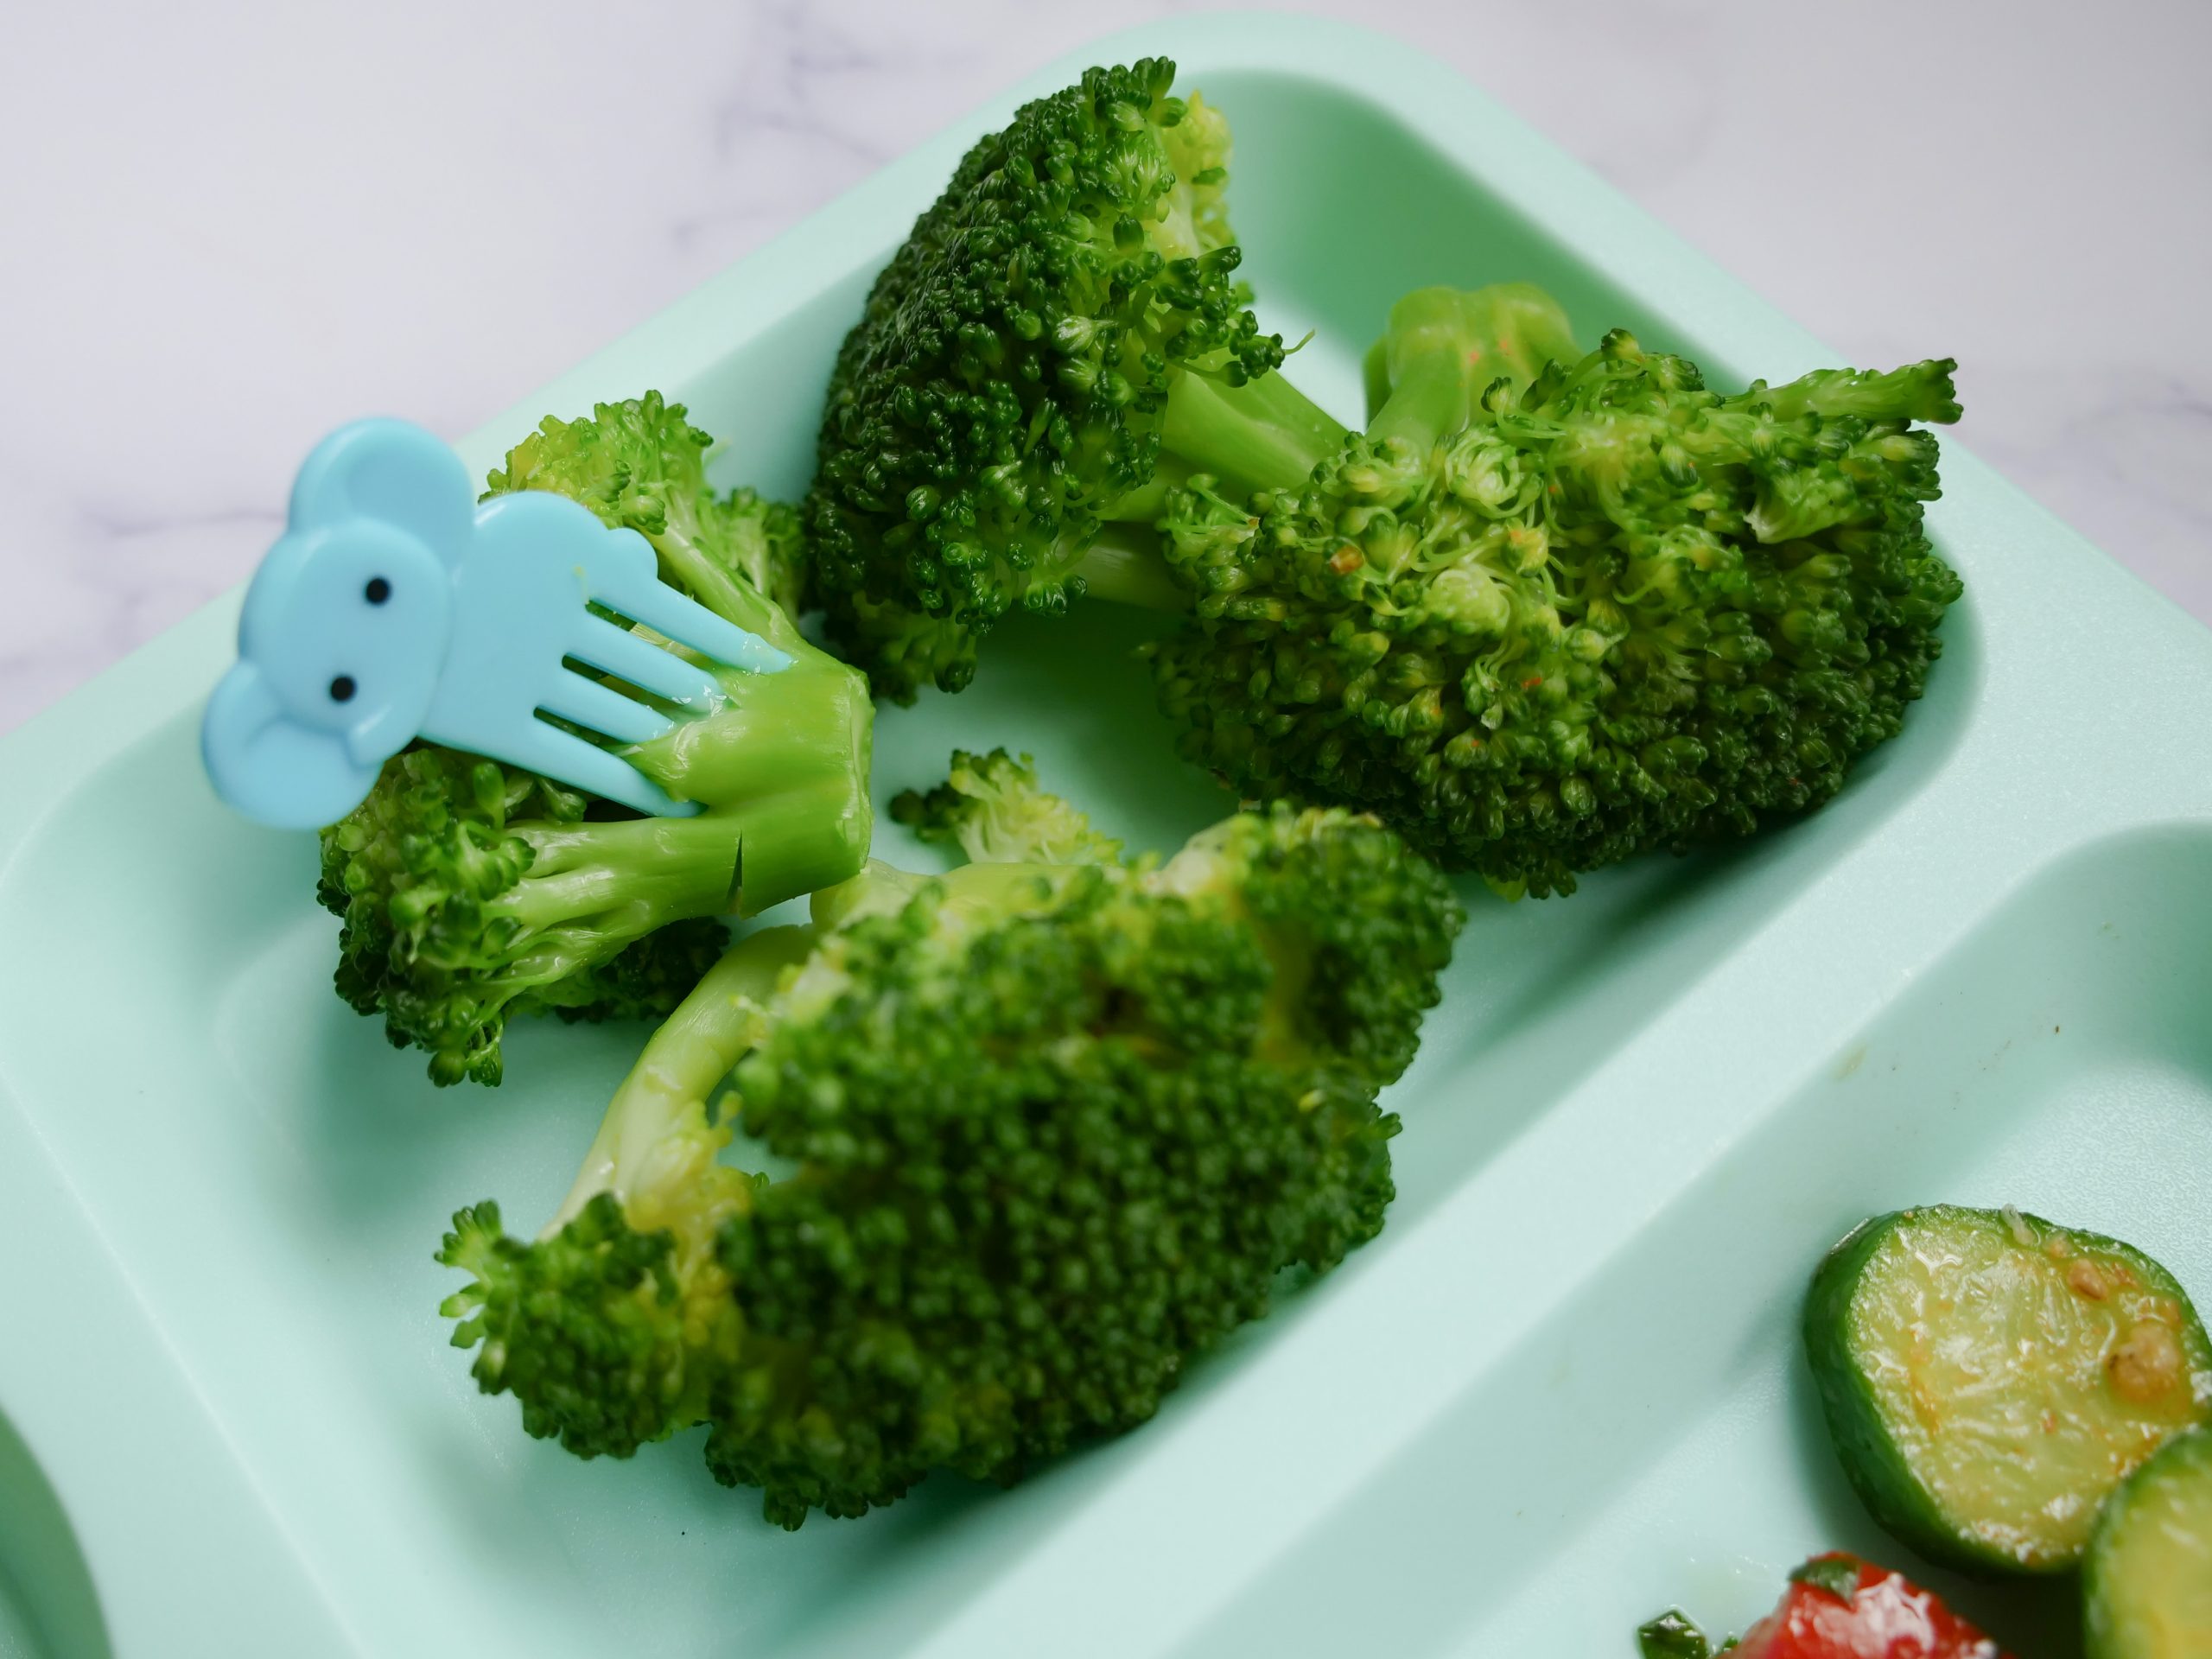 fun utensil on veggies